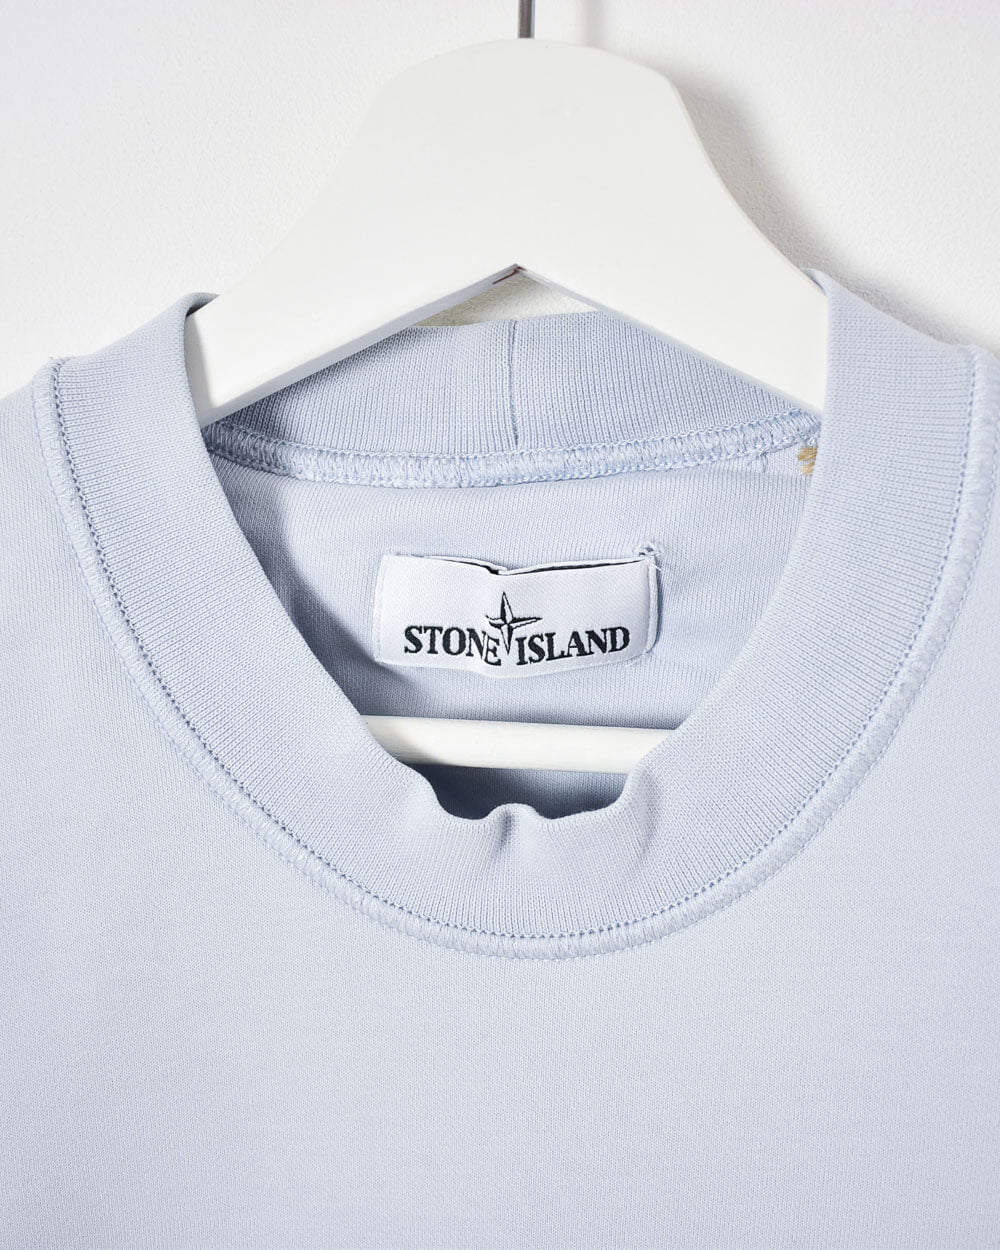 Stone Island Sweatshirt - Small - Domno Vintage 90s, 80s, 00s Retro and Vintage Clothing 